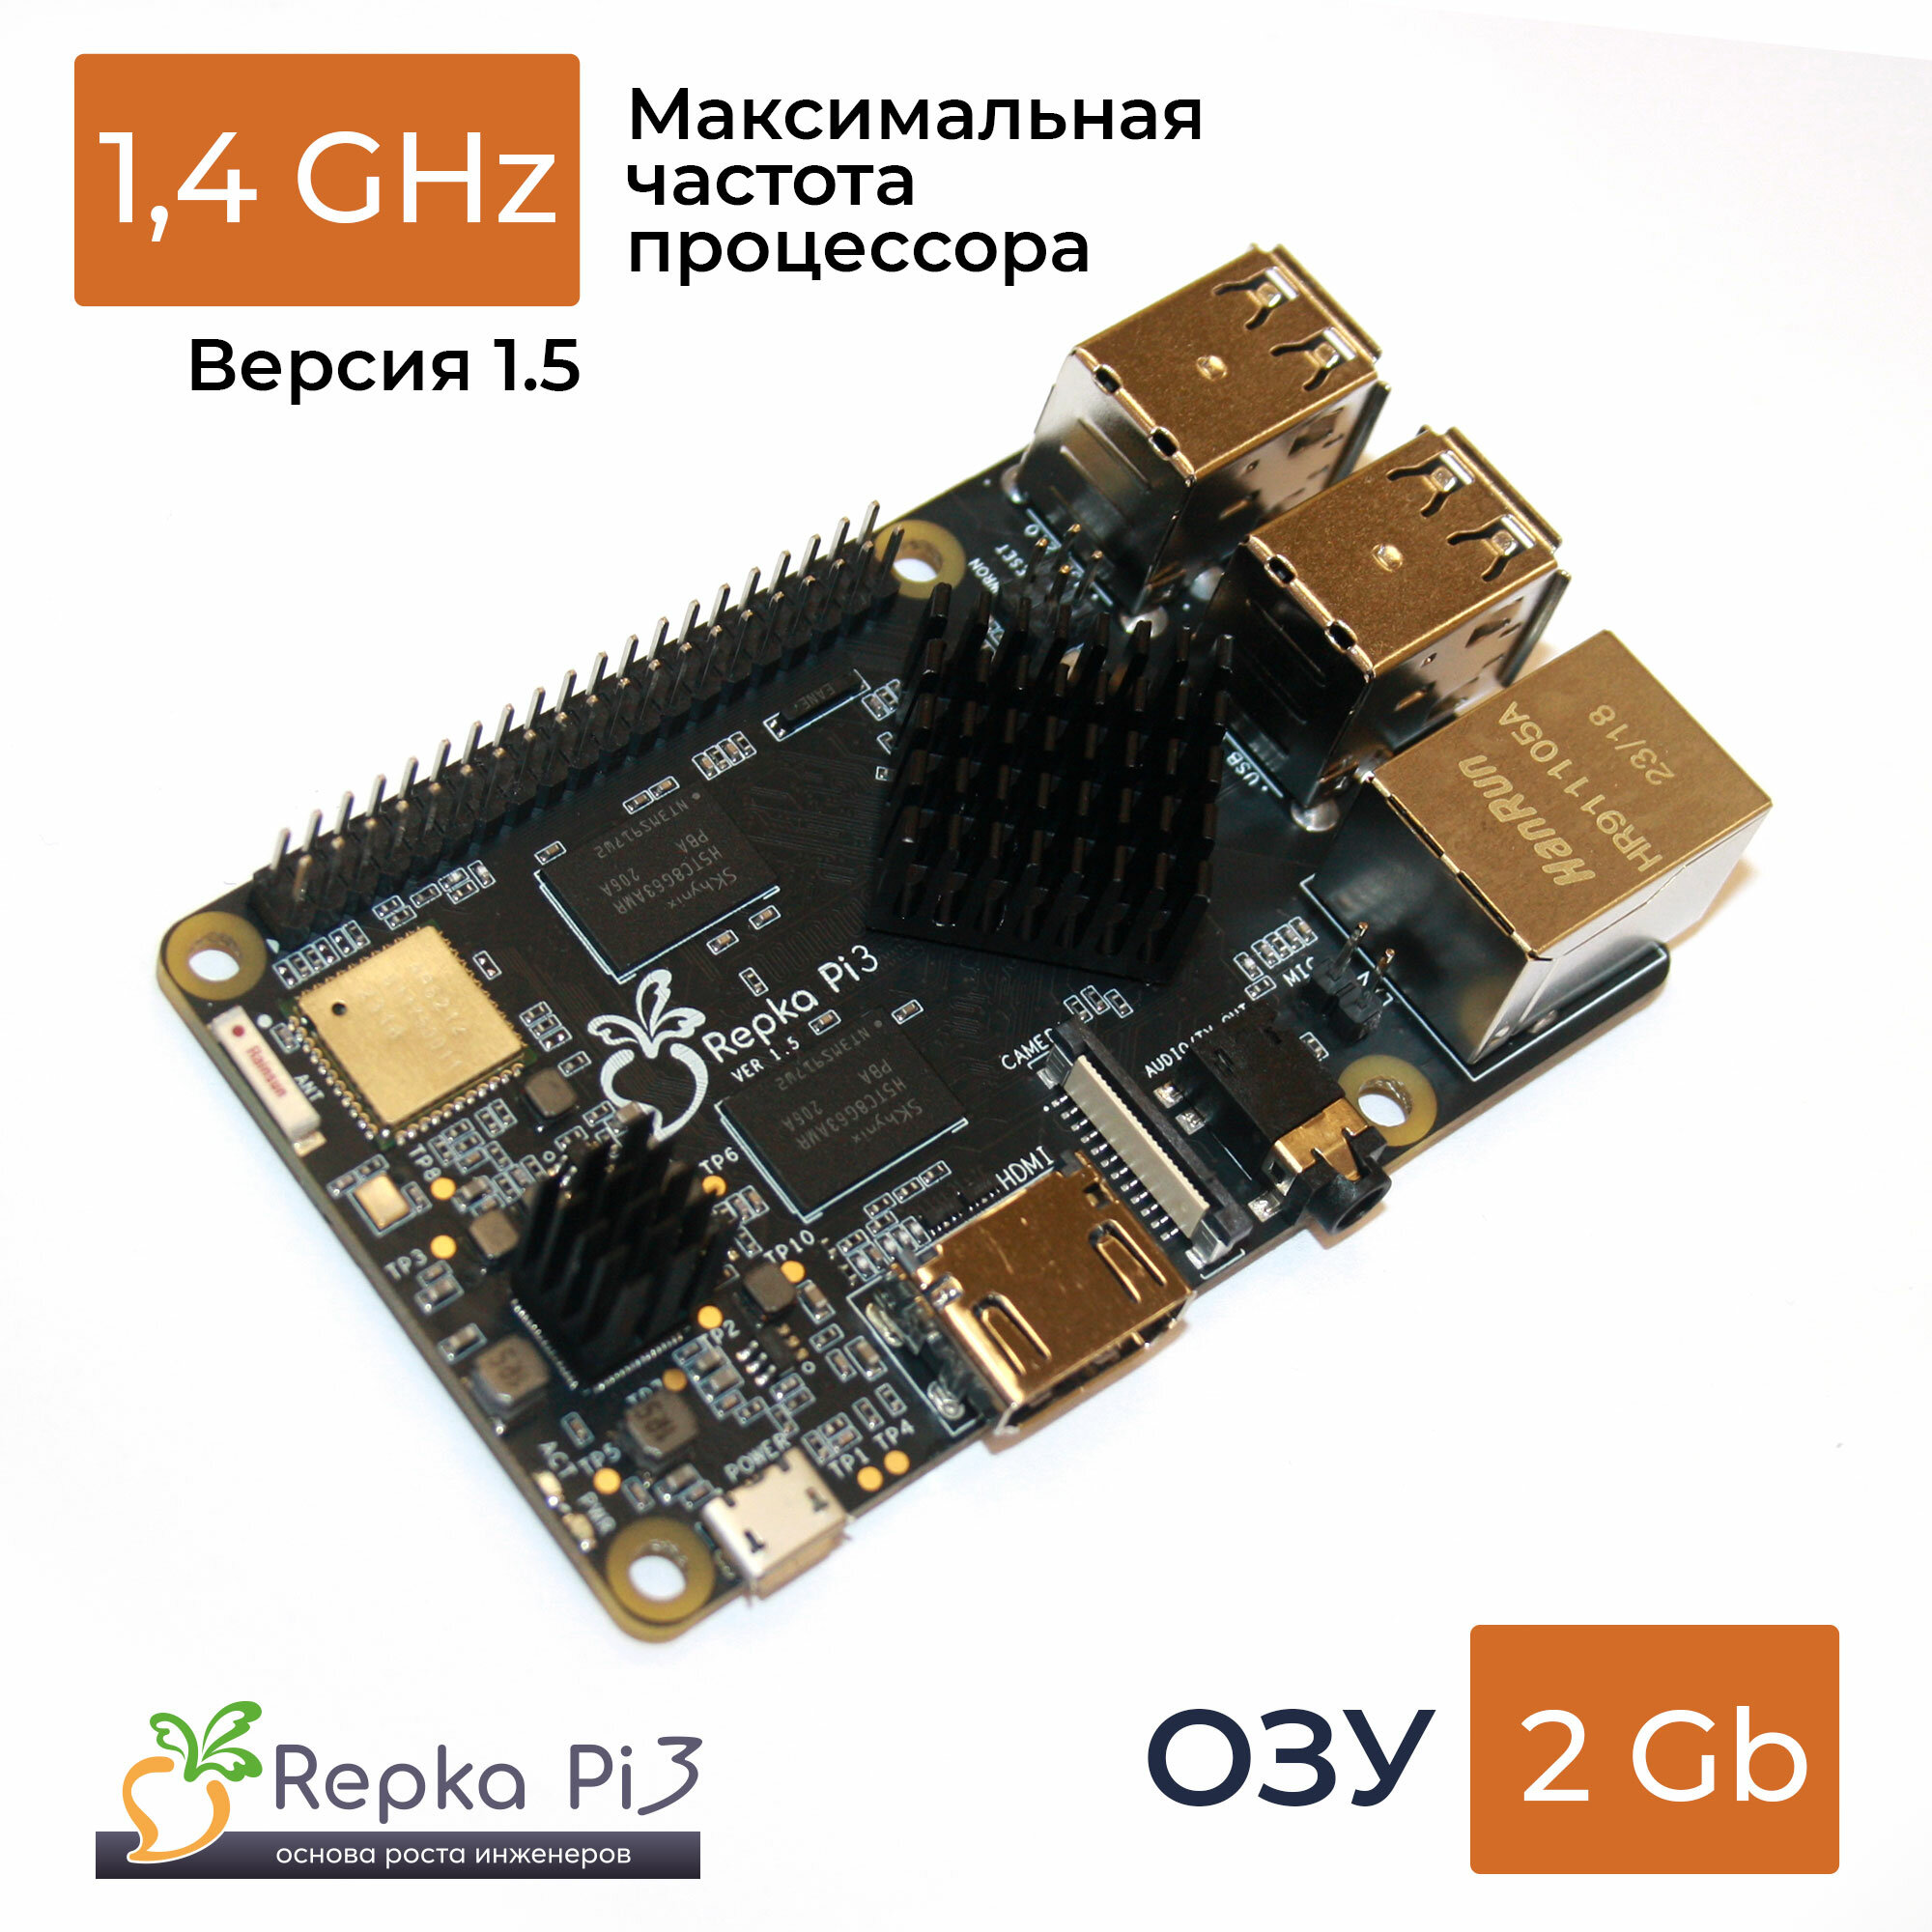 Repka Pi 3 1.4 Ghz, 2 Gb ОЗУ без корпуса. Версия платы 1.5